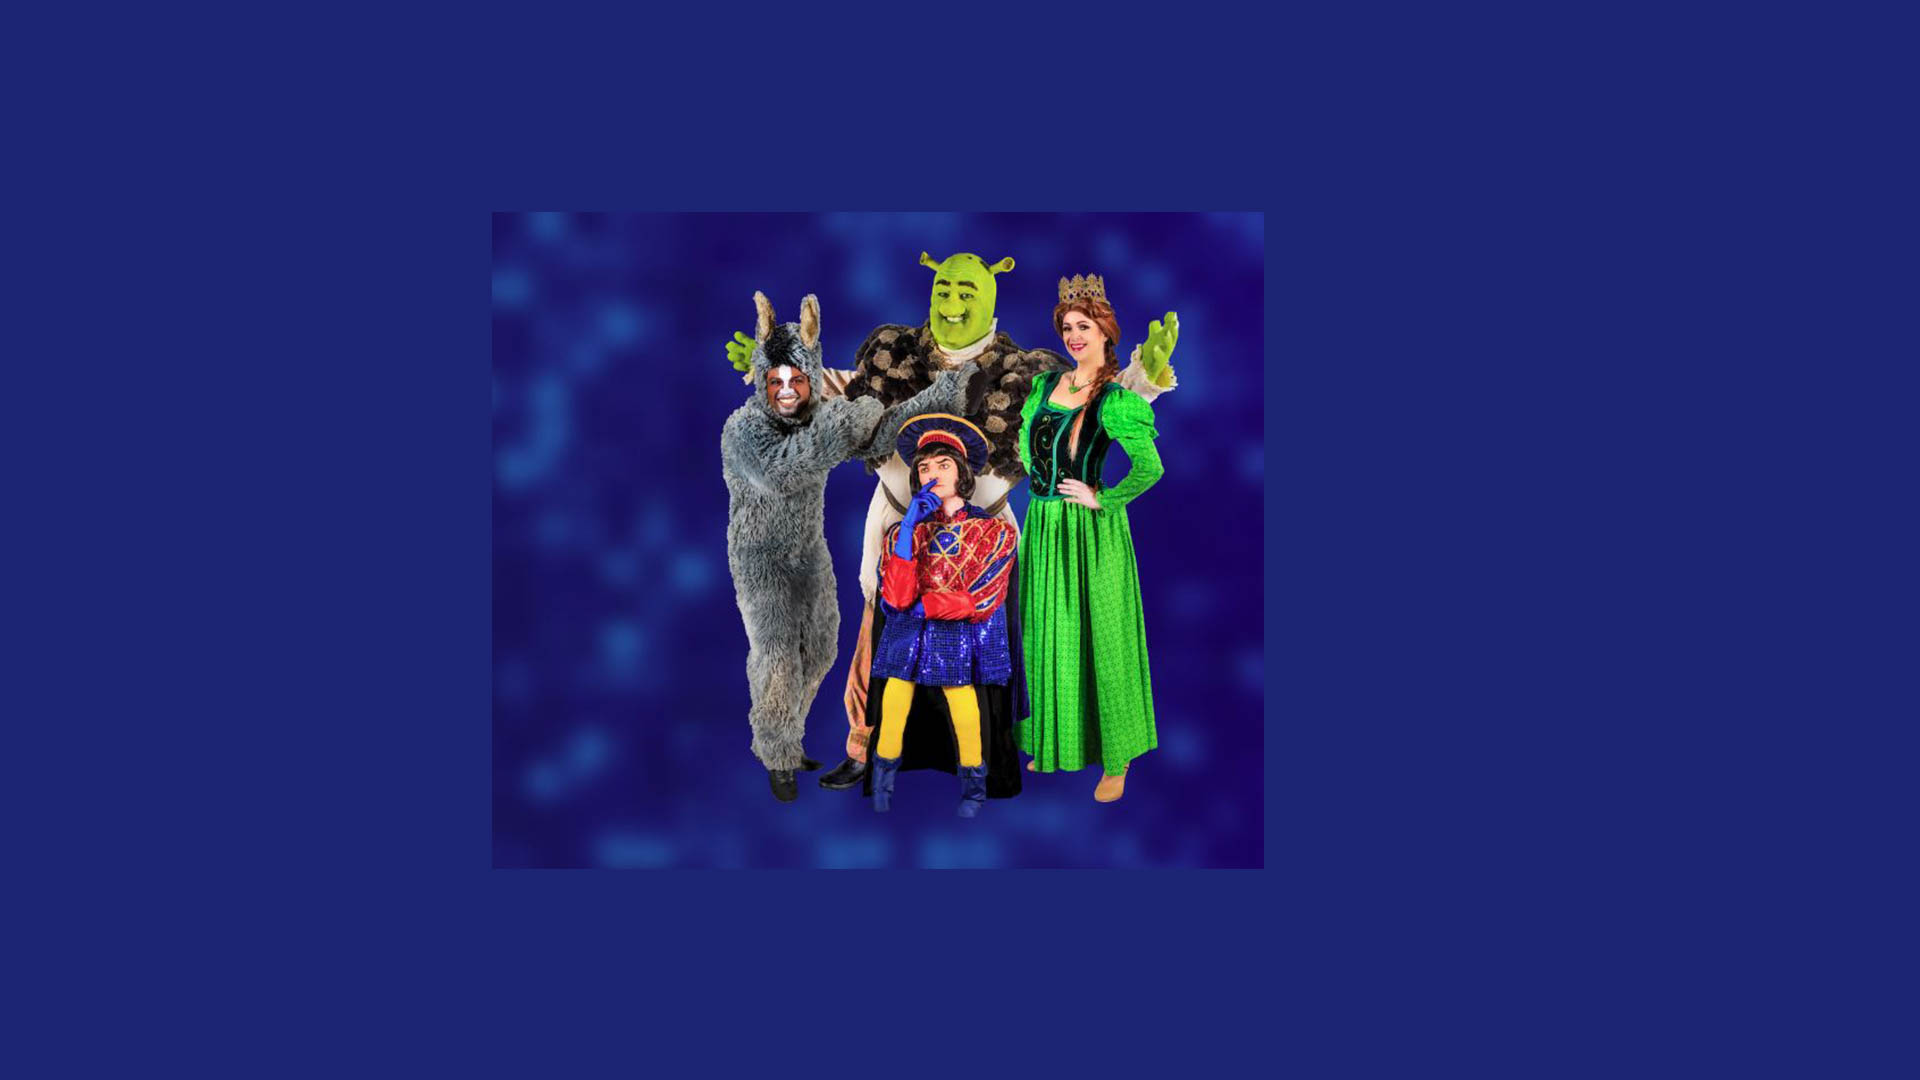 190703 Shreck Cast - Shrek The Musical wowing Branson audiences